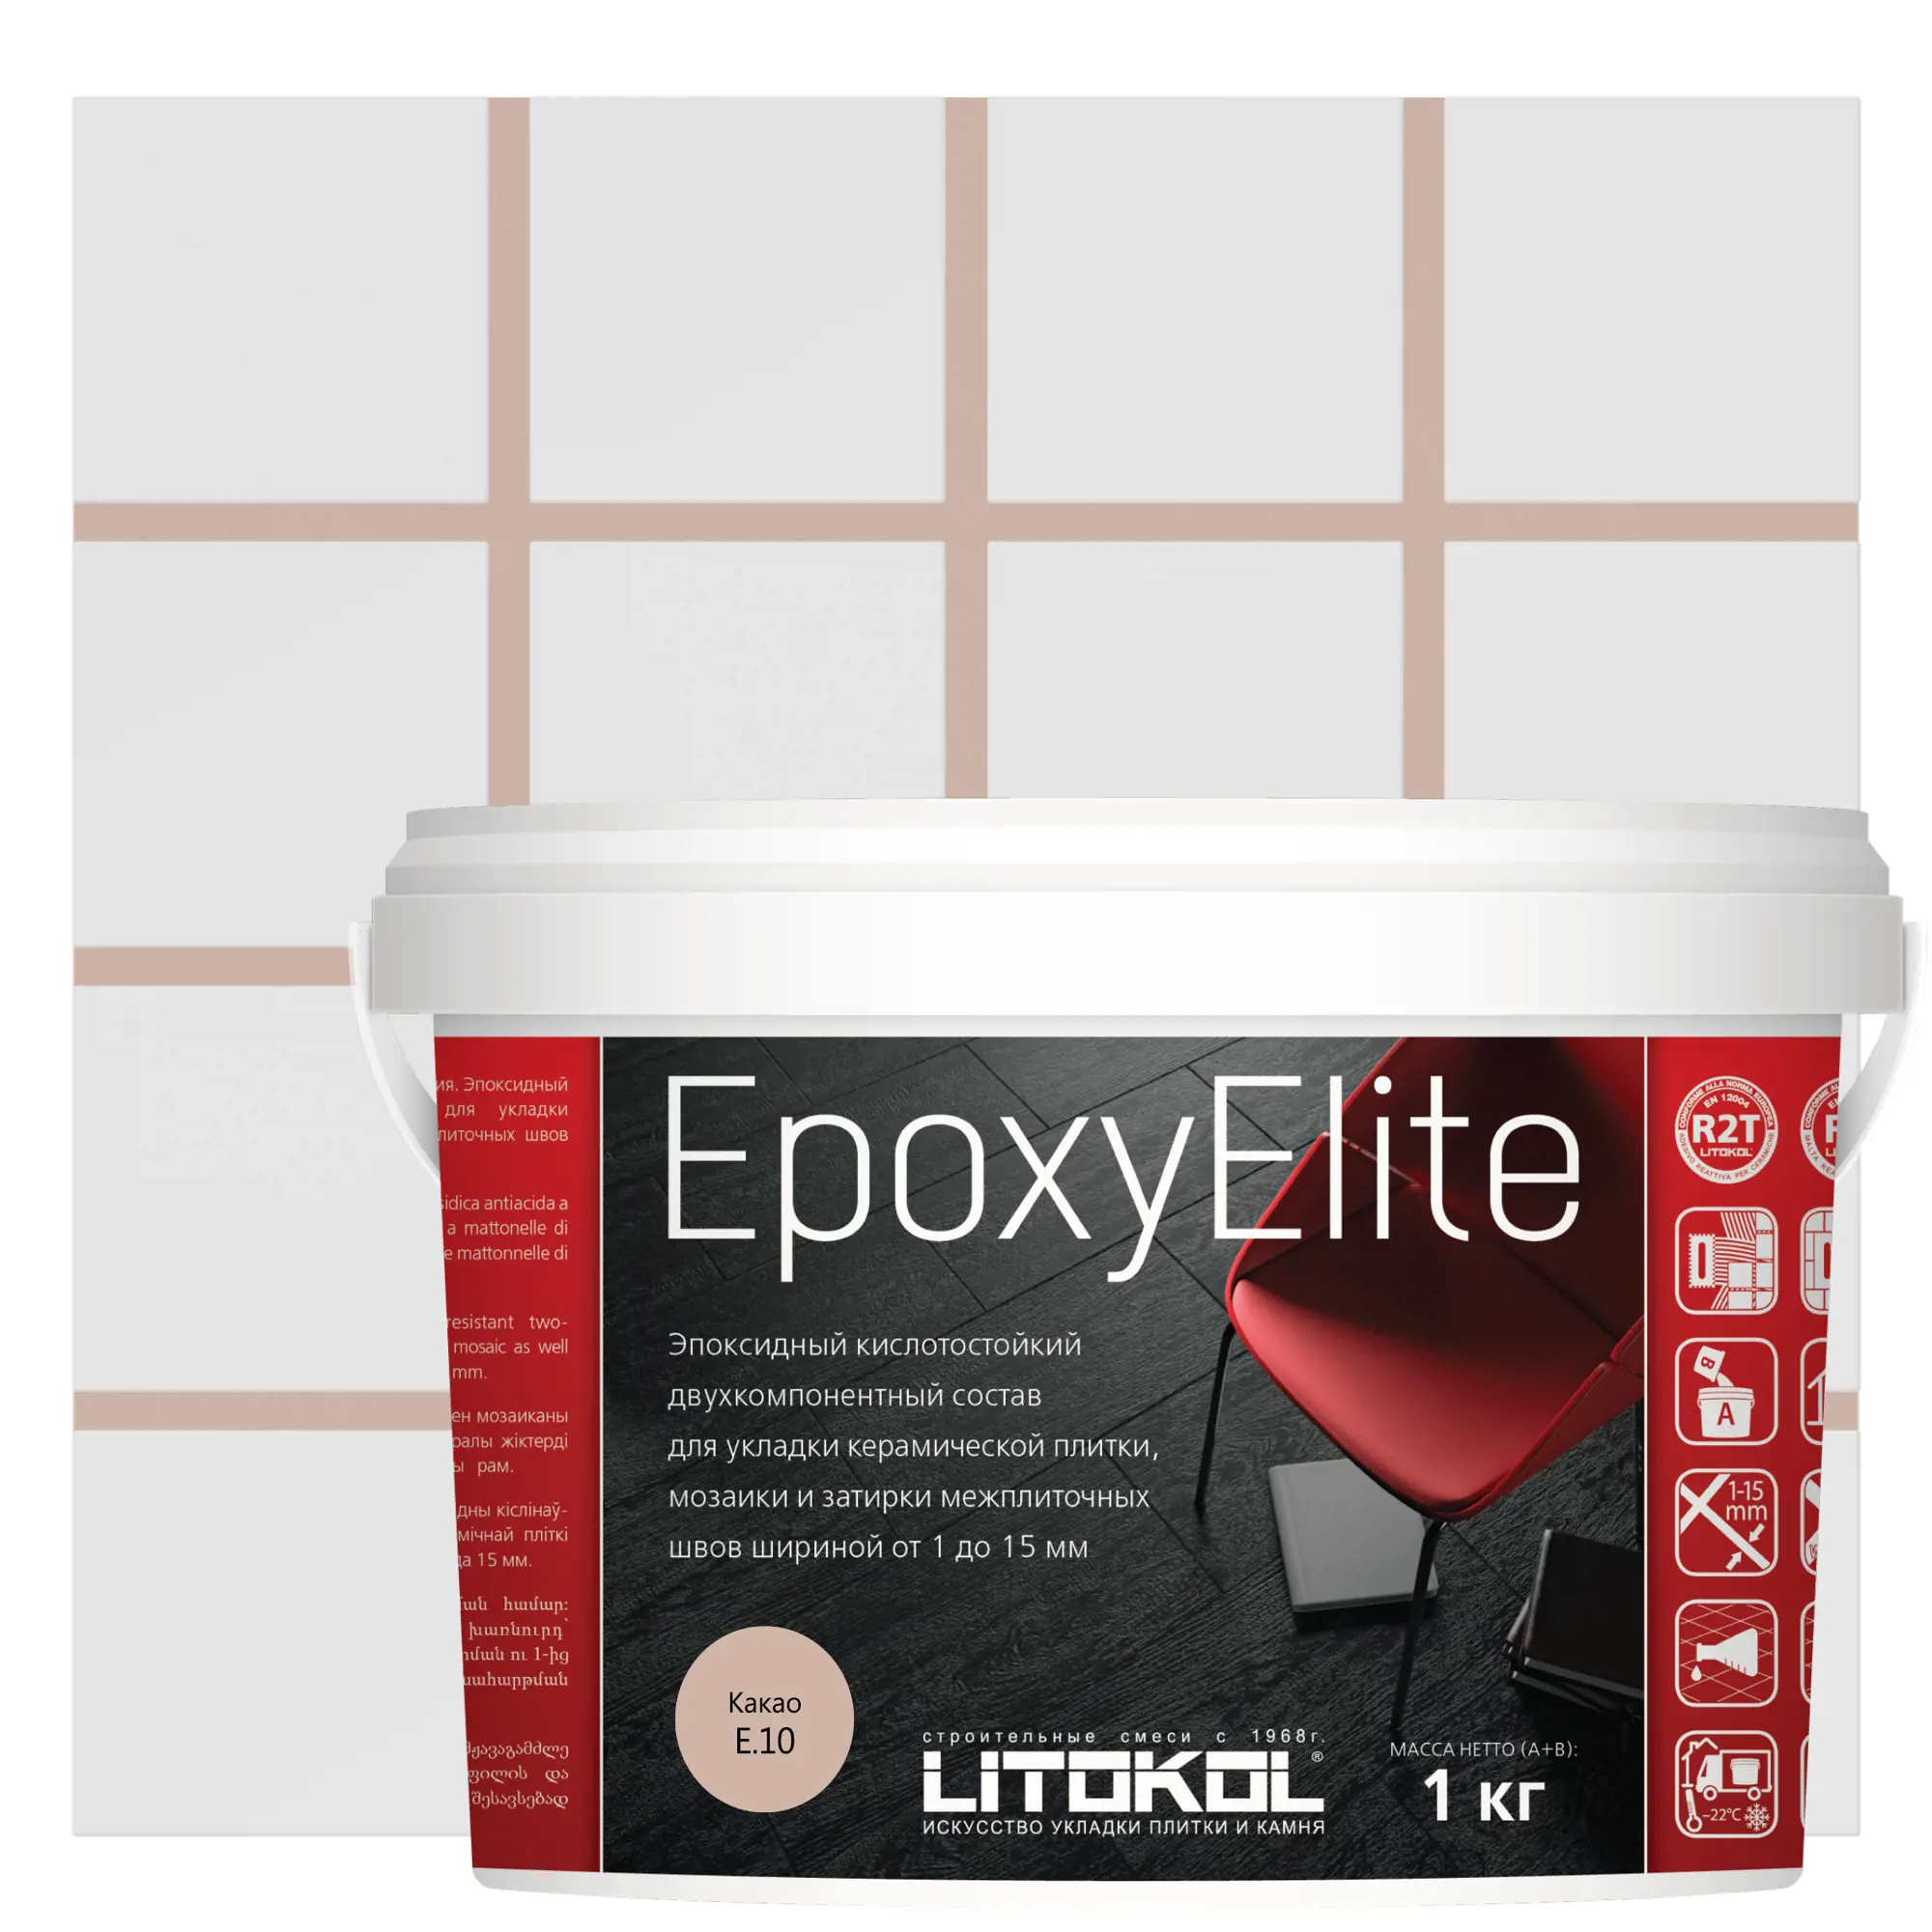 Затирка эпоксидная EpoxyElite E.10 1 кг цвет КАКАО